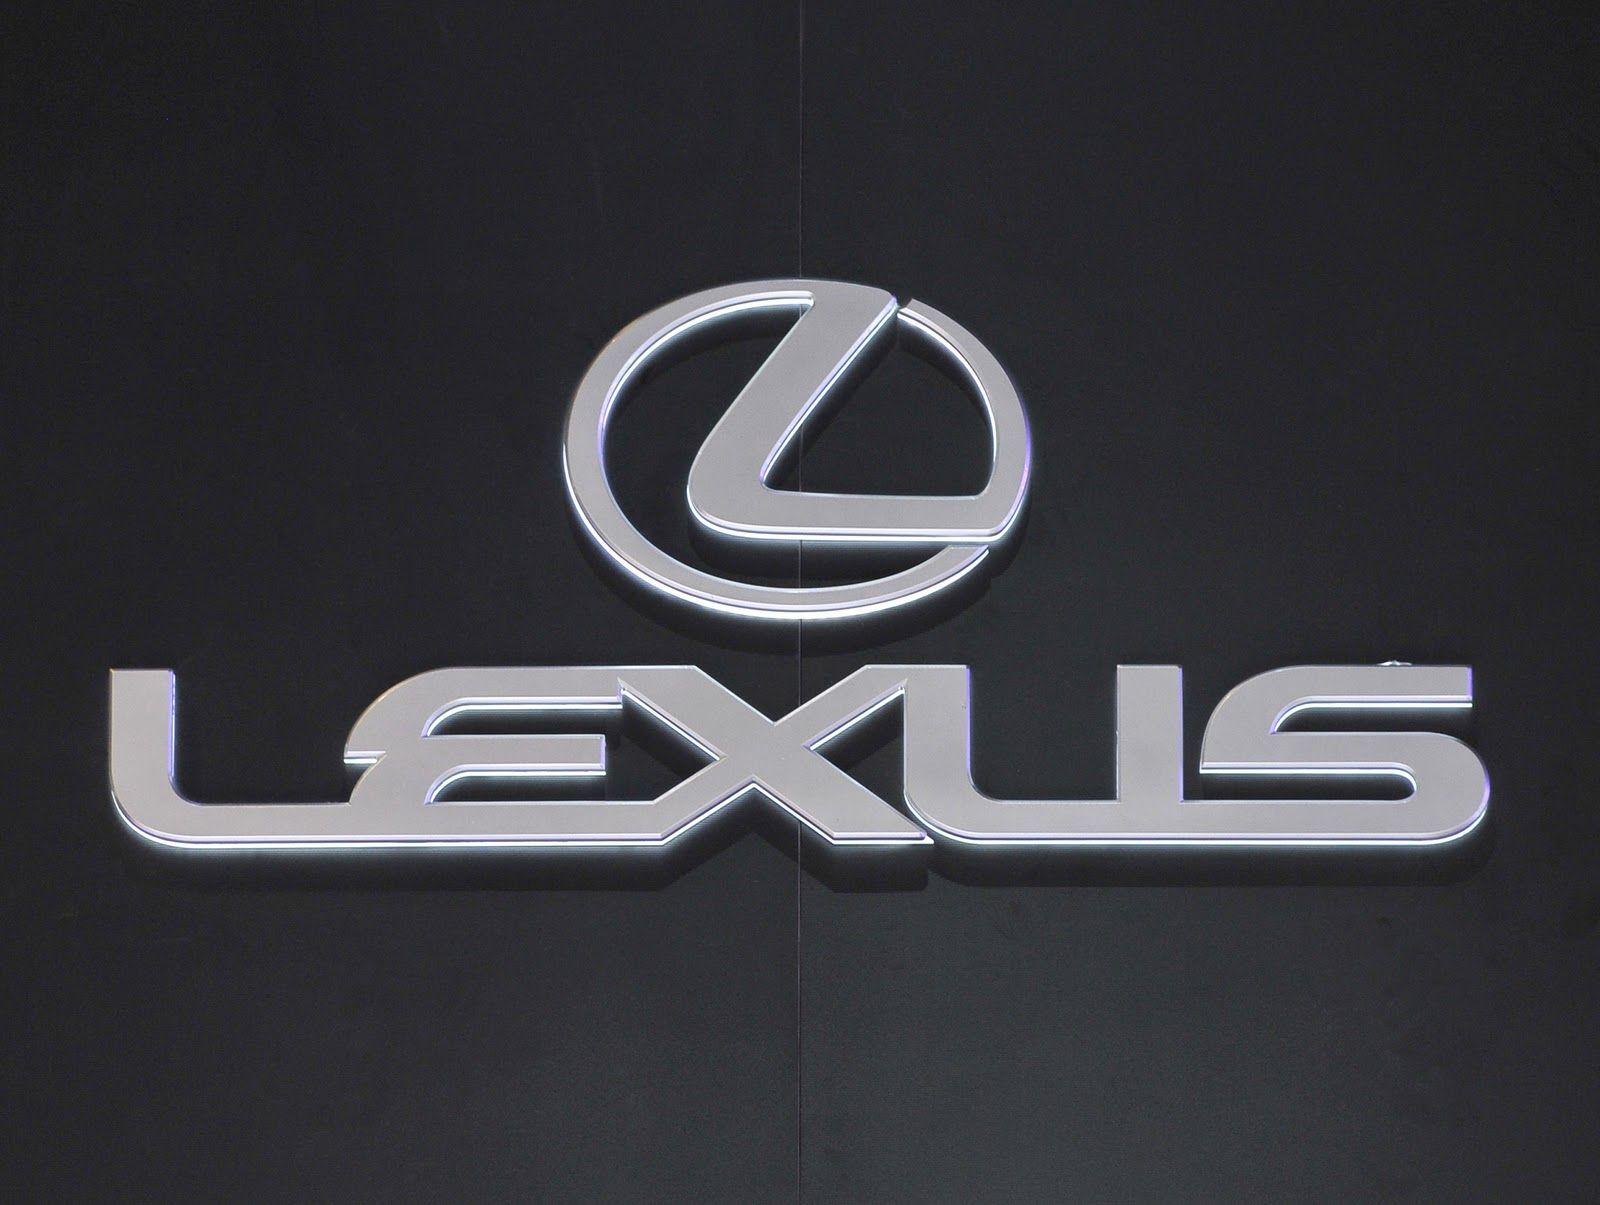 Name That Car Logo - Lexus Logo, Lexus Car Symbol Meaning and History | Car Brand Names.com